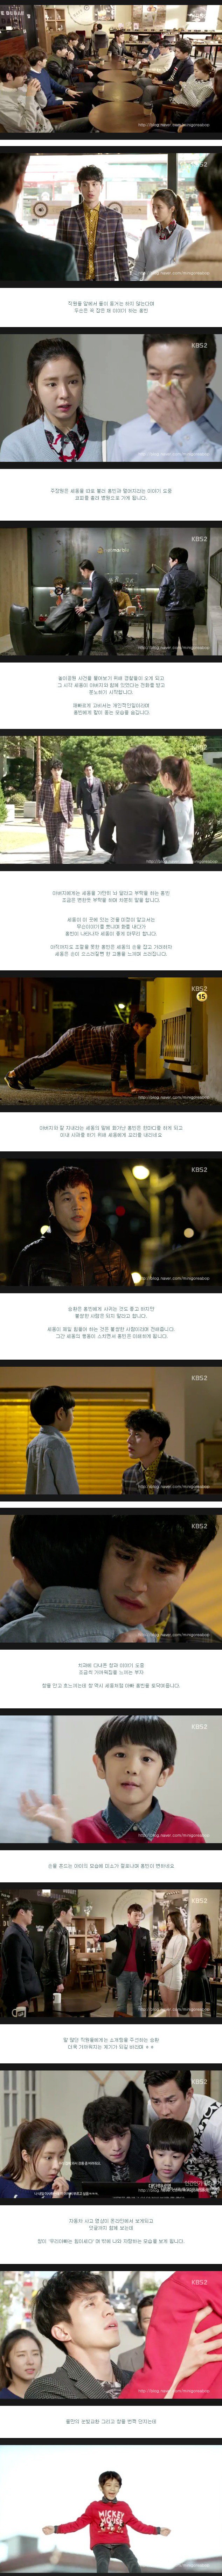 episode 11 captures for the Korean drama 'Blade Man'